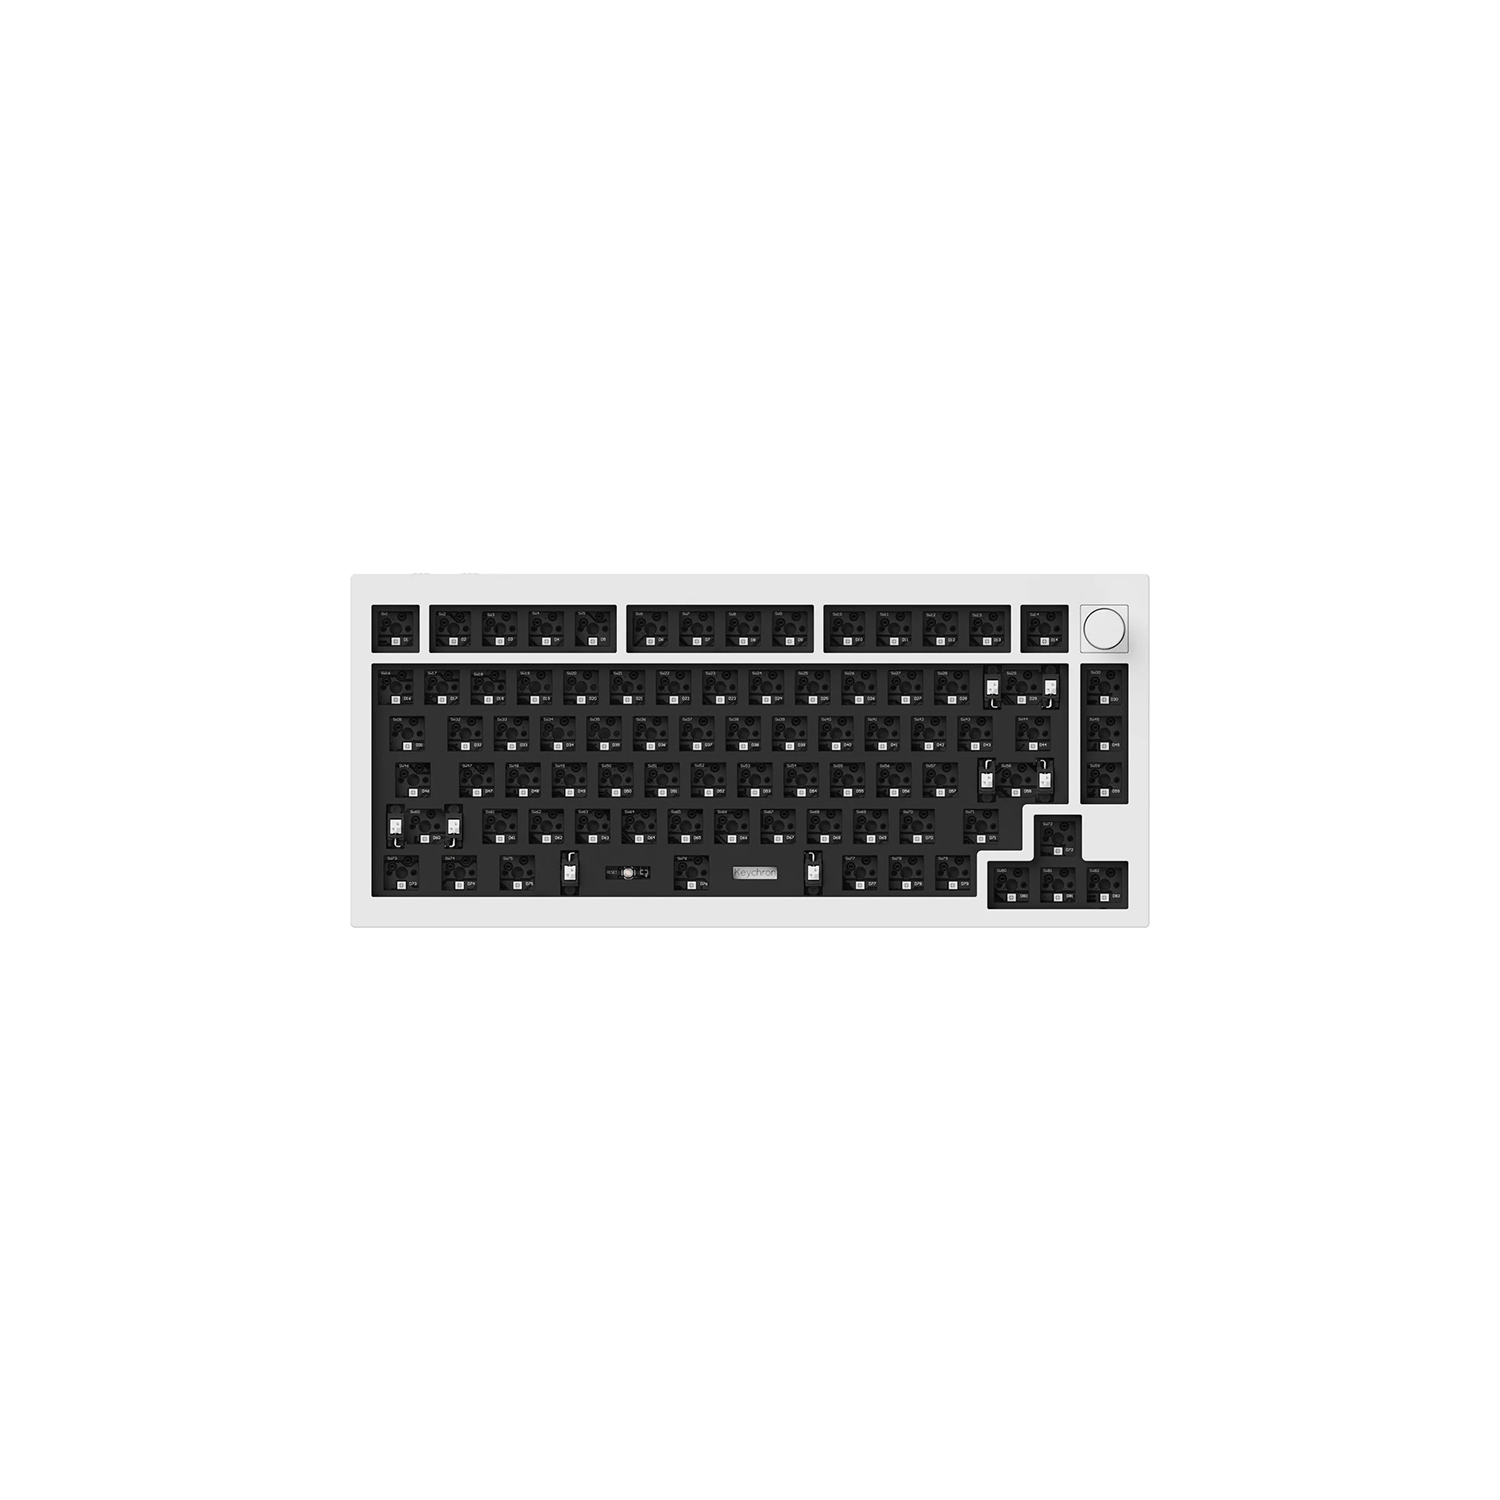 Keychron Q1 Pro Hotswap Mechanical Keyboard - RGB - Aluminum Frame - Shell White - Wireless - with Knob - Barebone - 75% - Windows Mac OS (Q1P-B4)